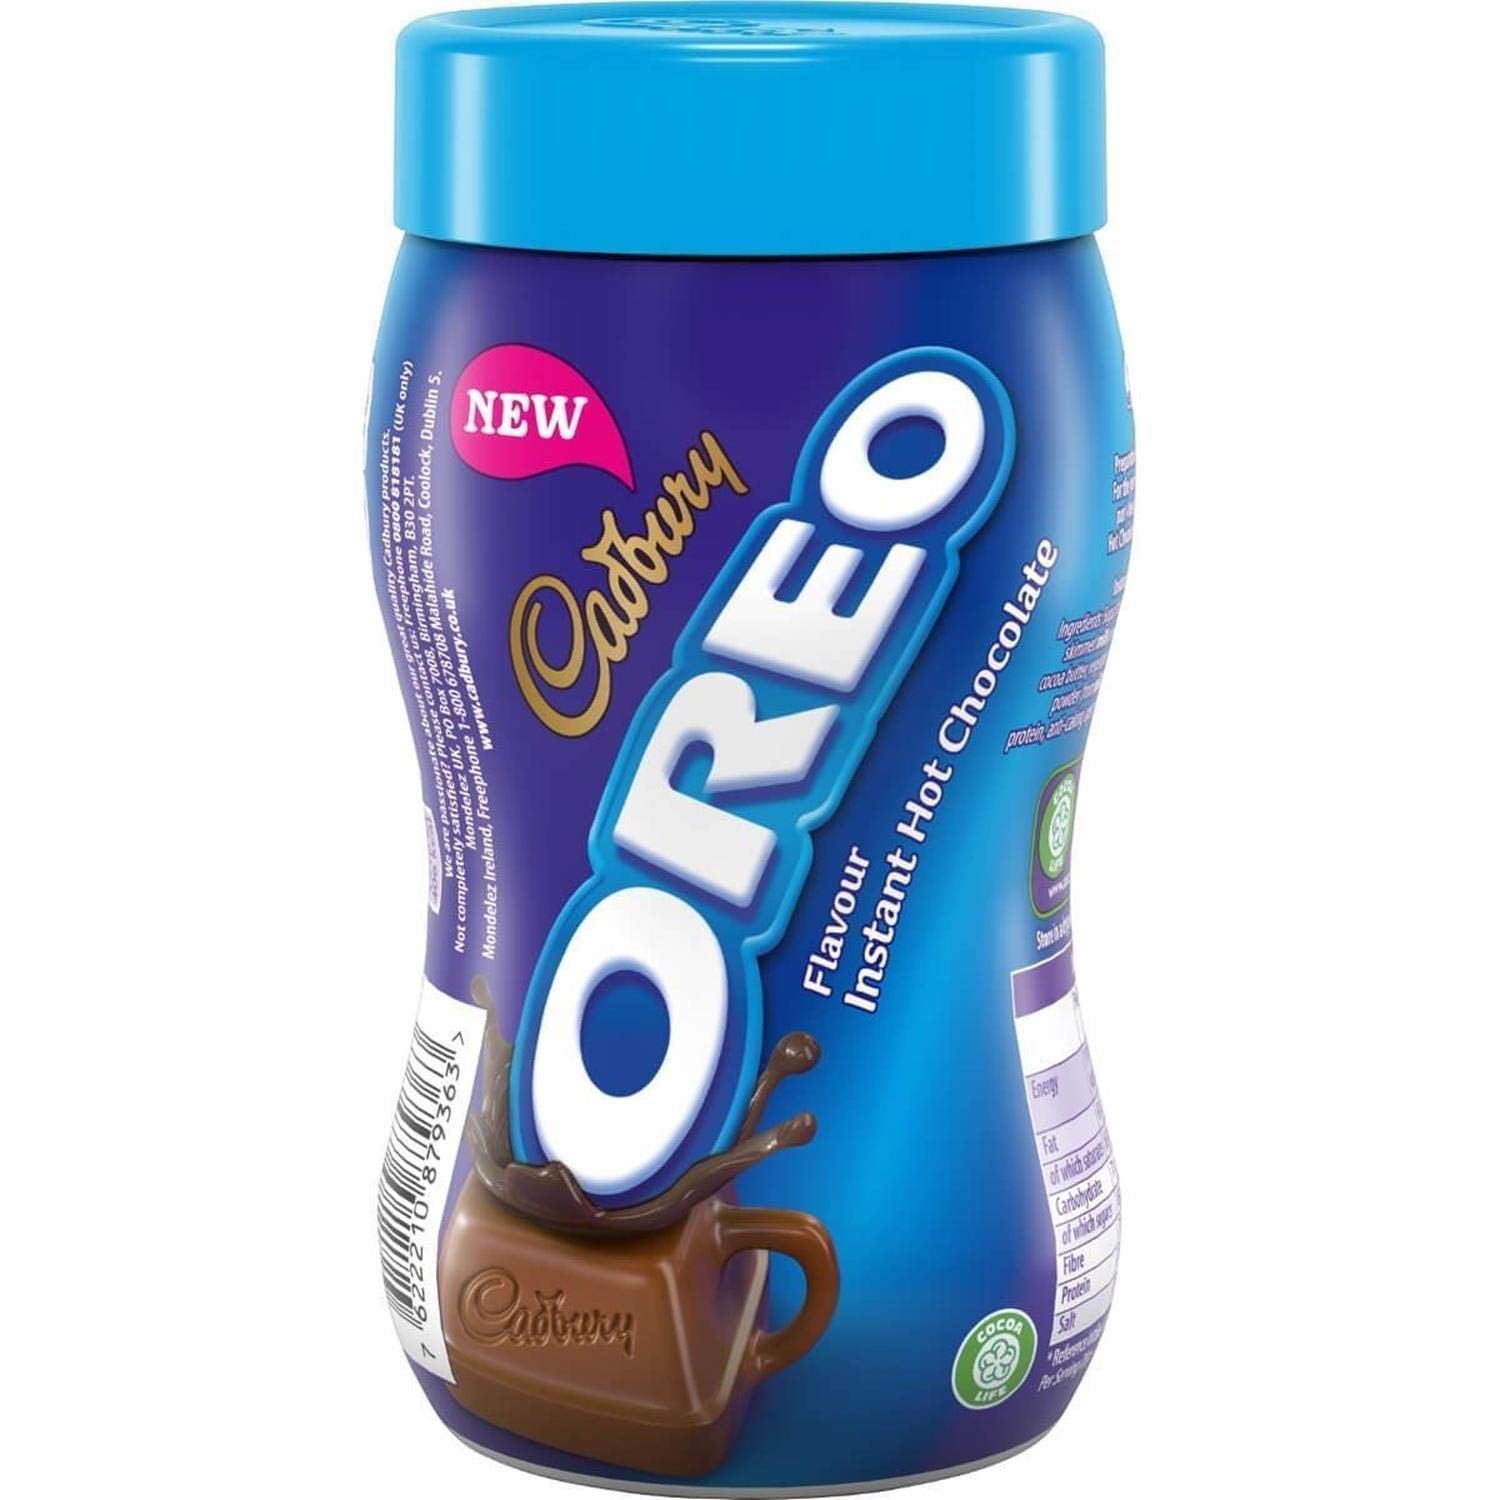 Cadbury Oreo Instant Hot Chocolate Flavour 260g แคดเบอรี โอริโอ้  เครื่องดื่มรสช็อกโกแลต 260 กรัม